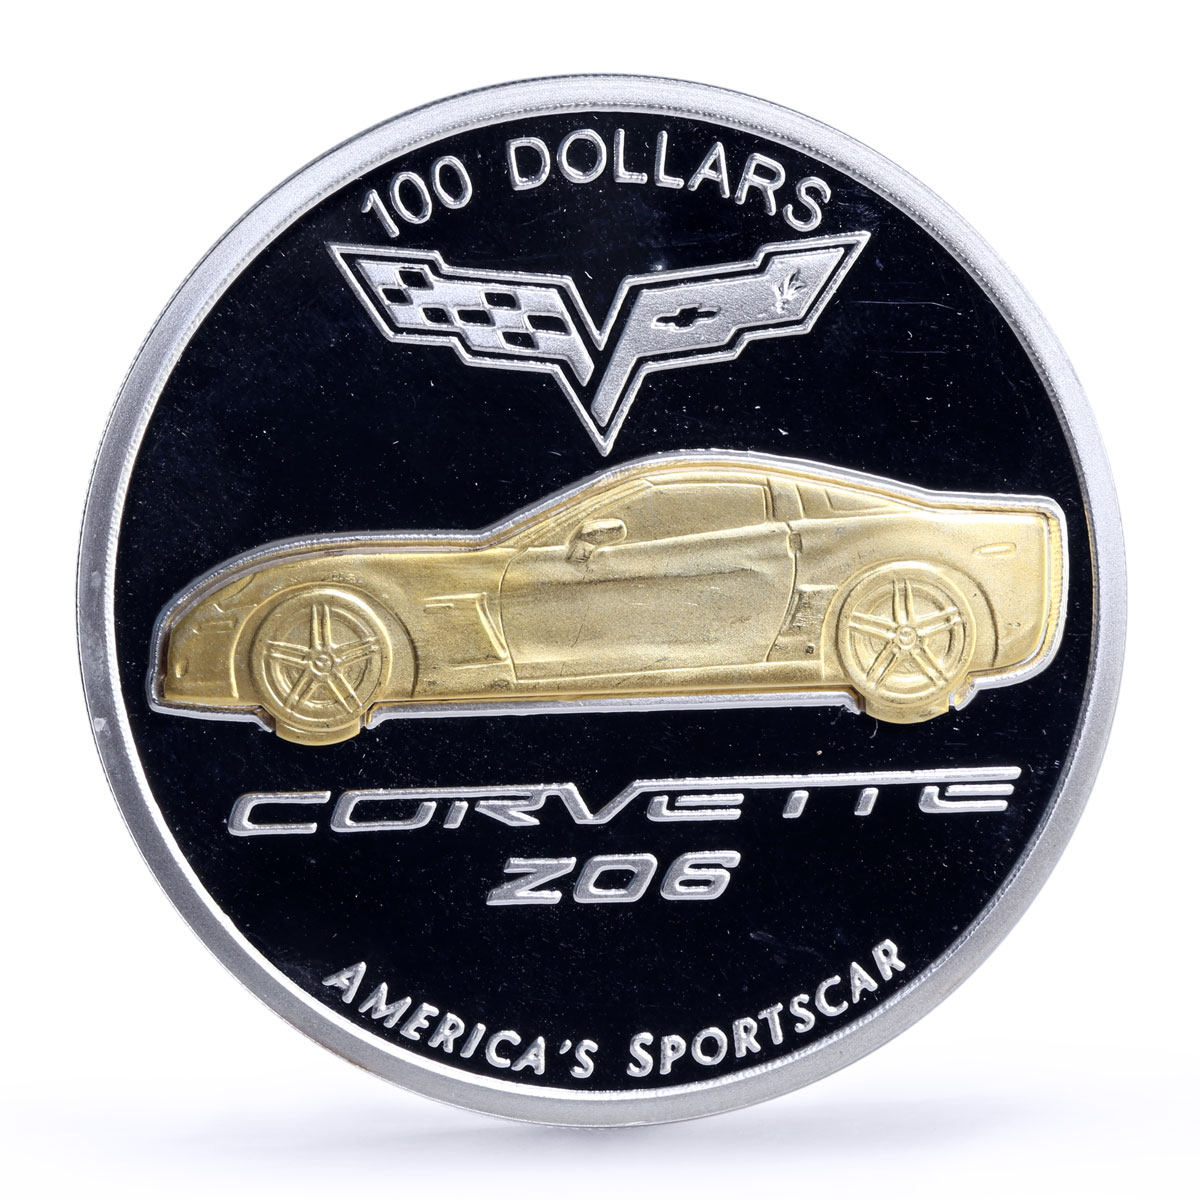 Palau 100 dollars General Motors Sportscar Corvette Car proof silver coin 2008